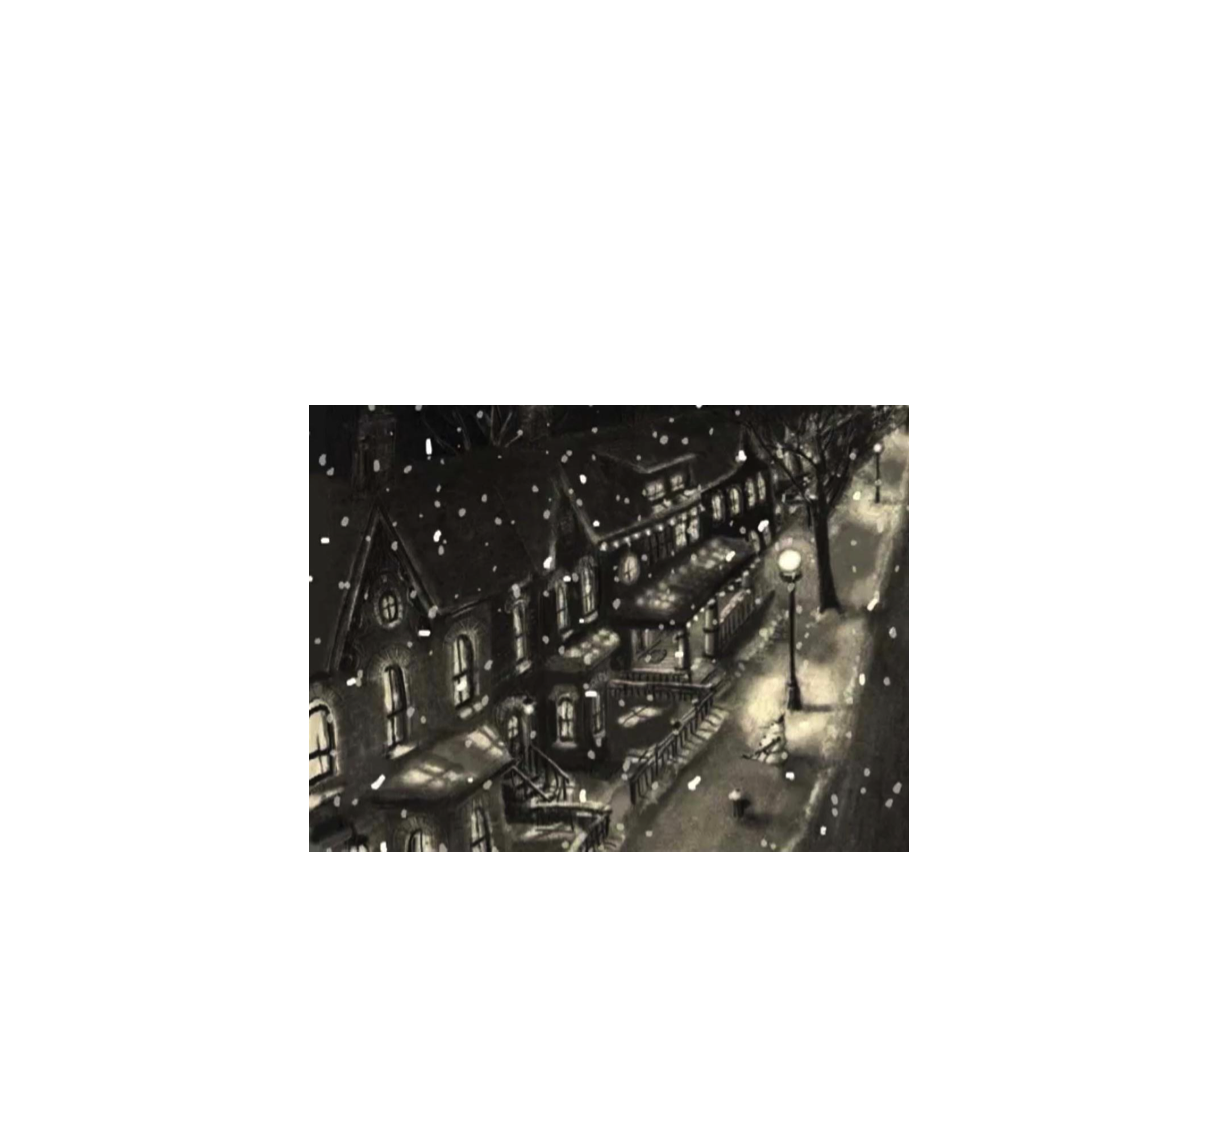  ‘ ‘Twas the Night            Before...’

A Christmas Card for everyone.

￼

http://www.youtube.com/watch?v=cavp69Ux-0E
